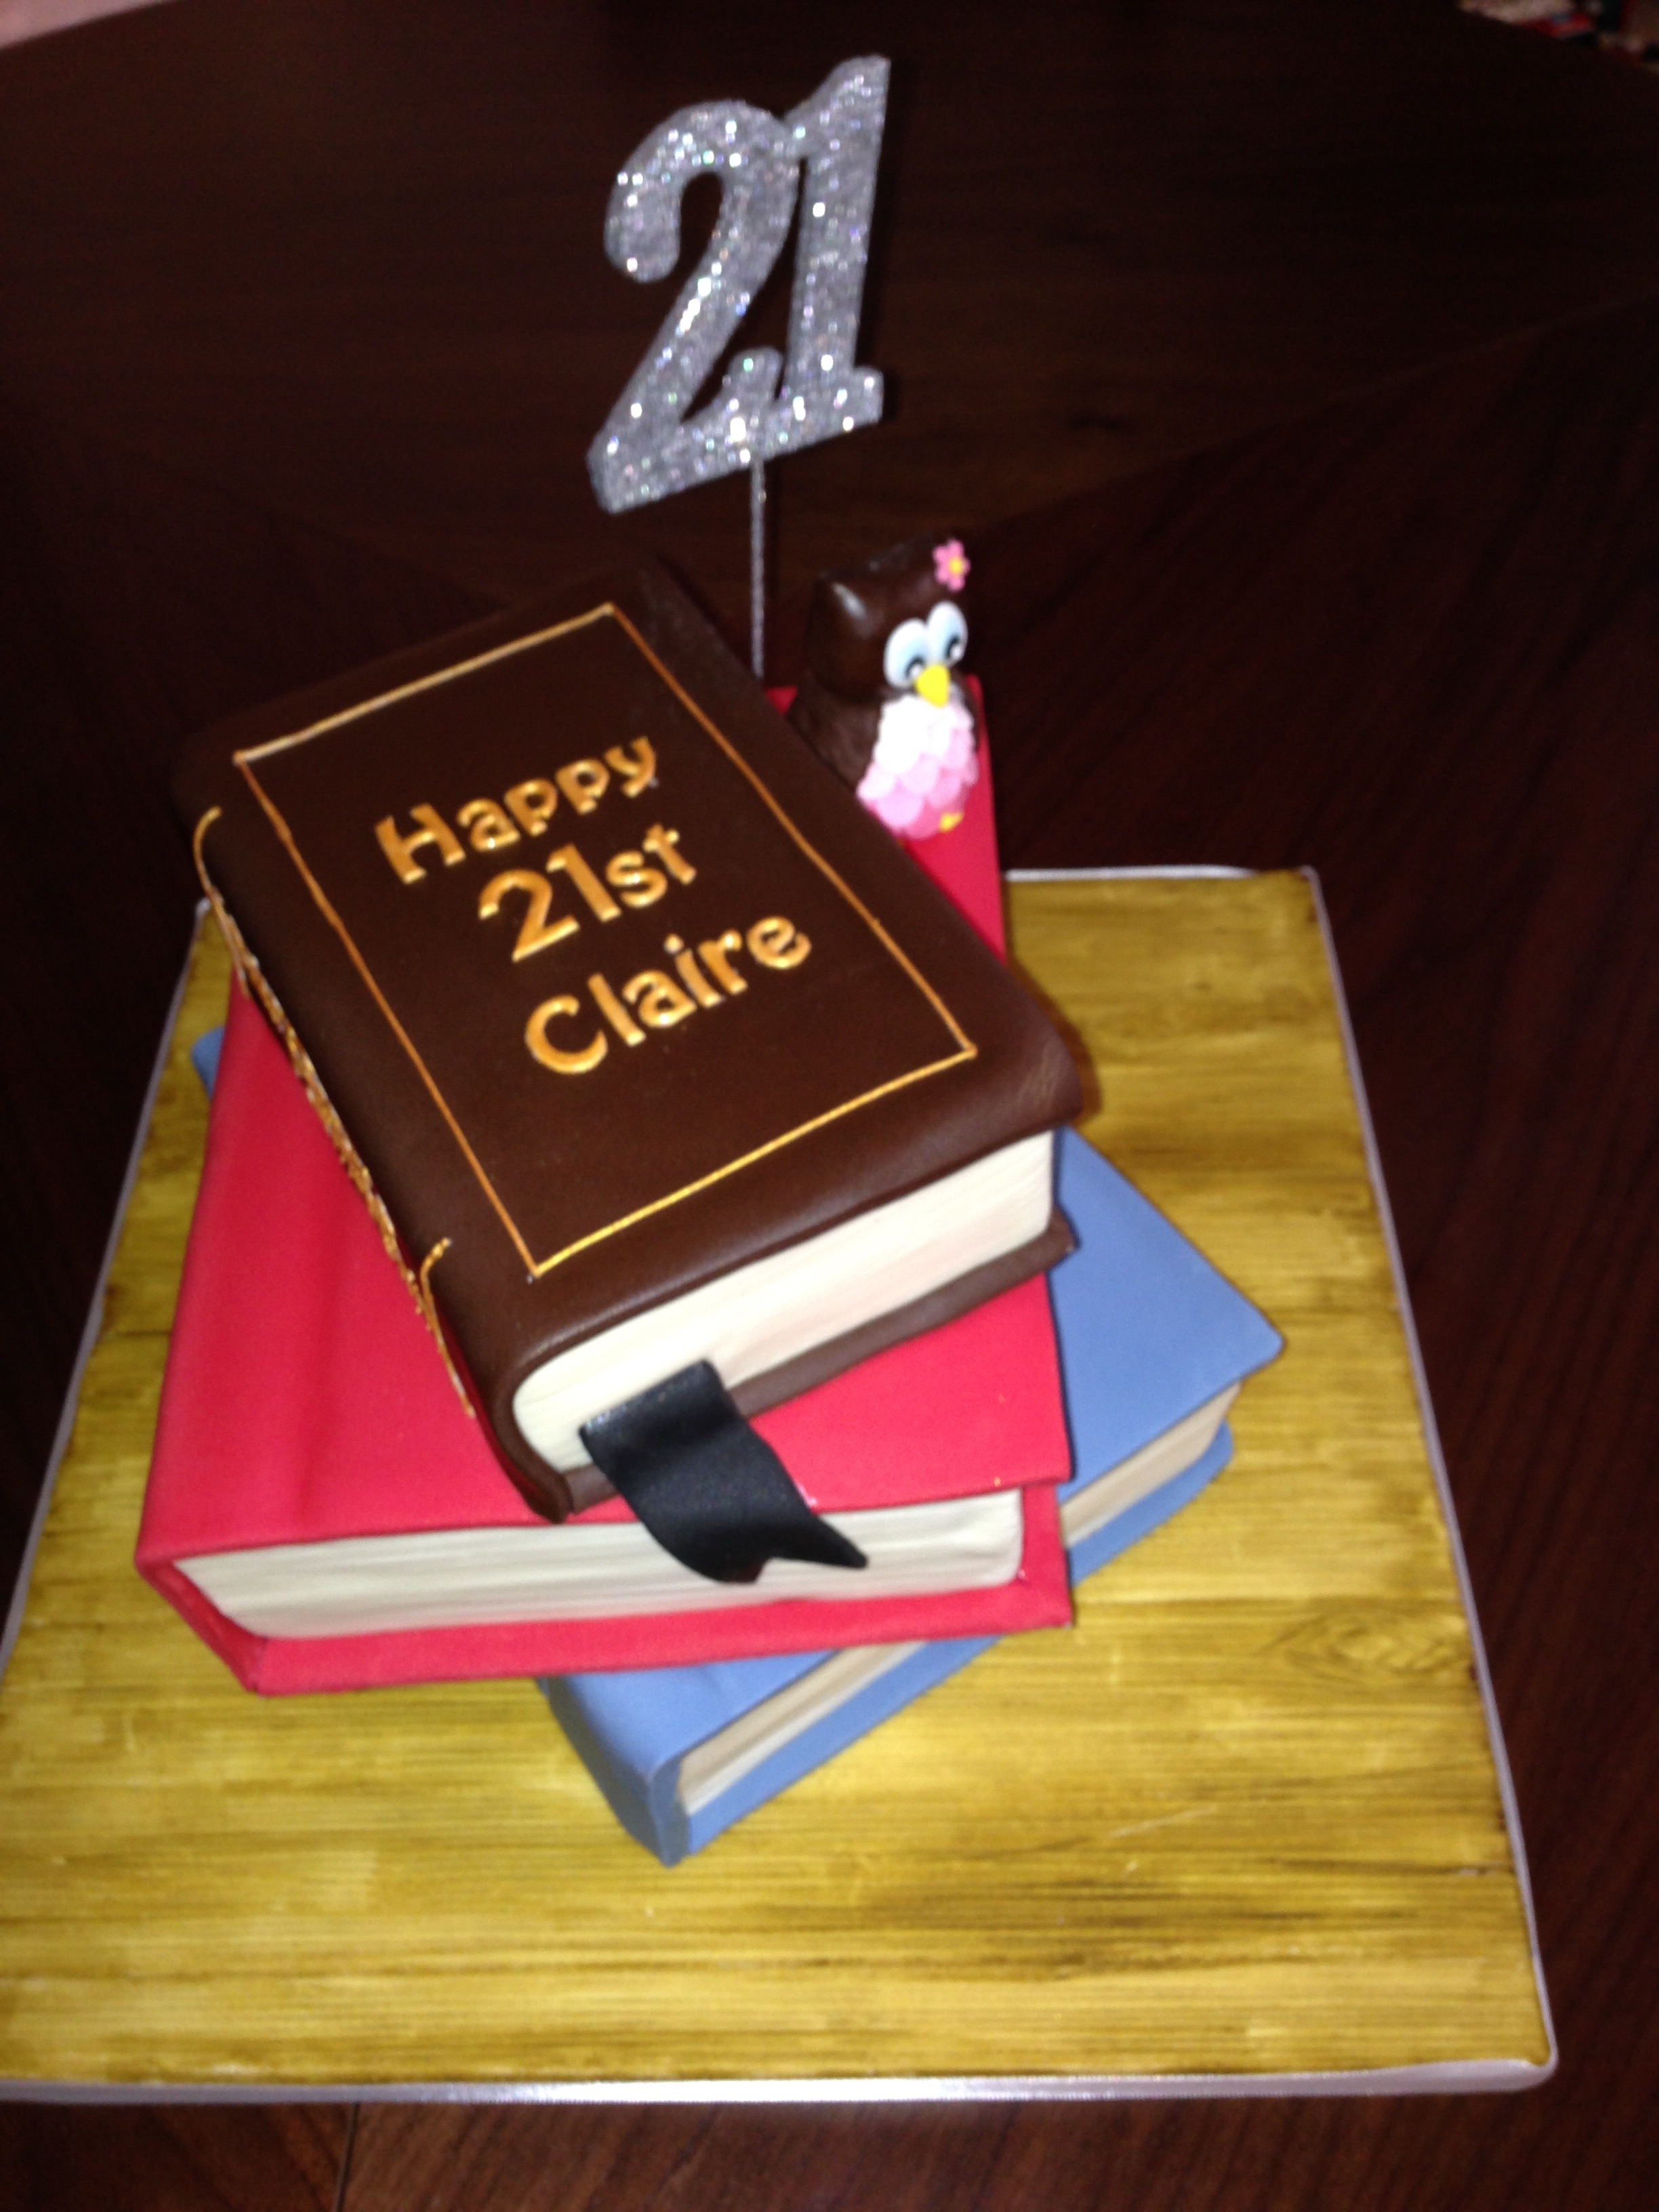 Books 21st cake